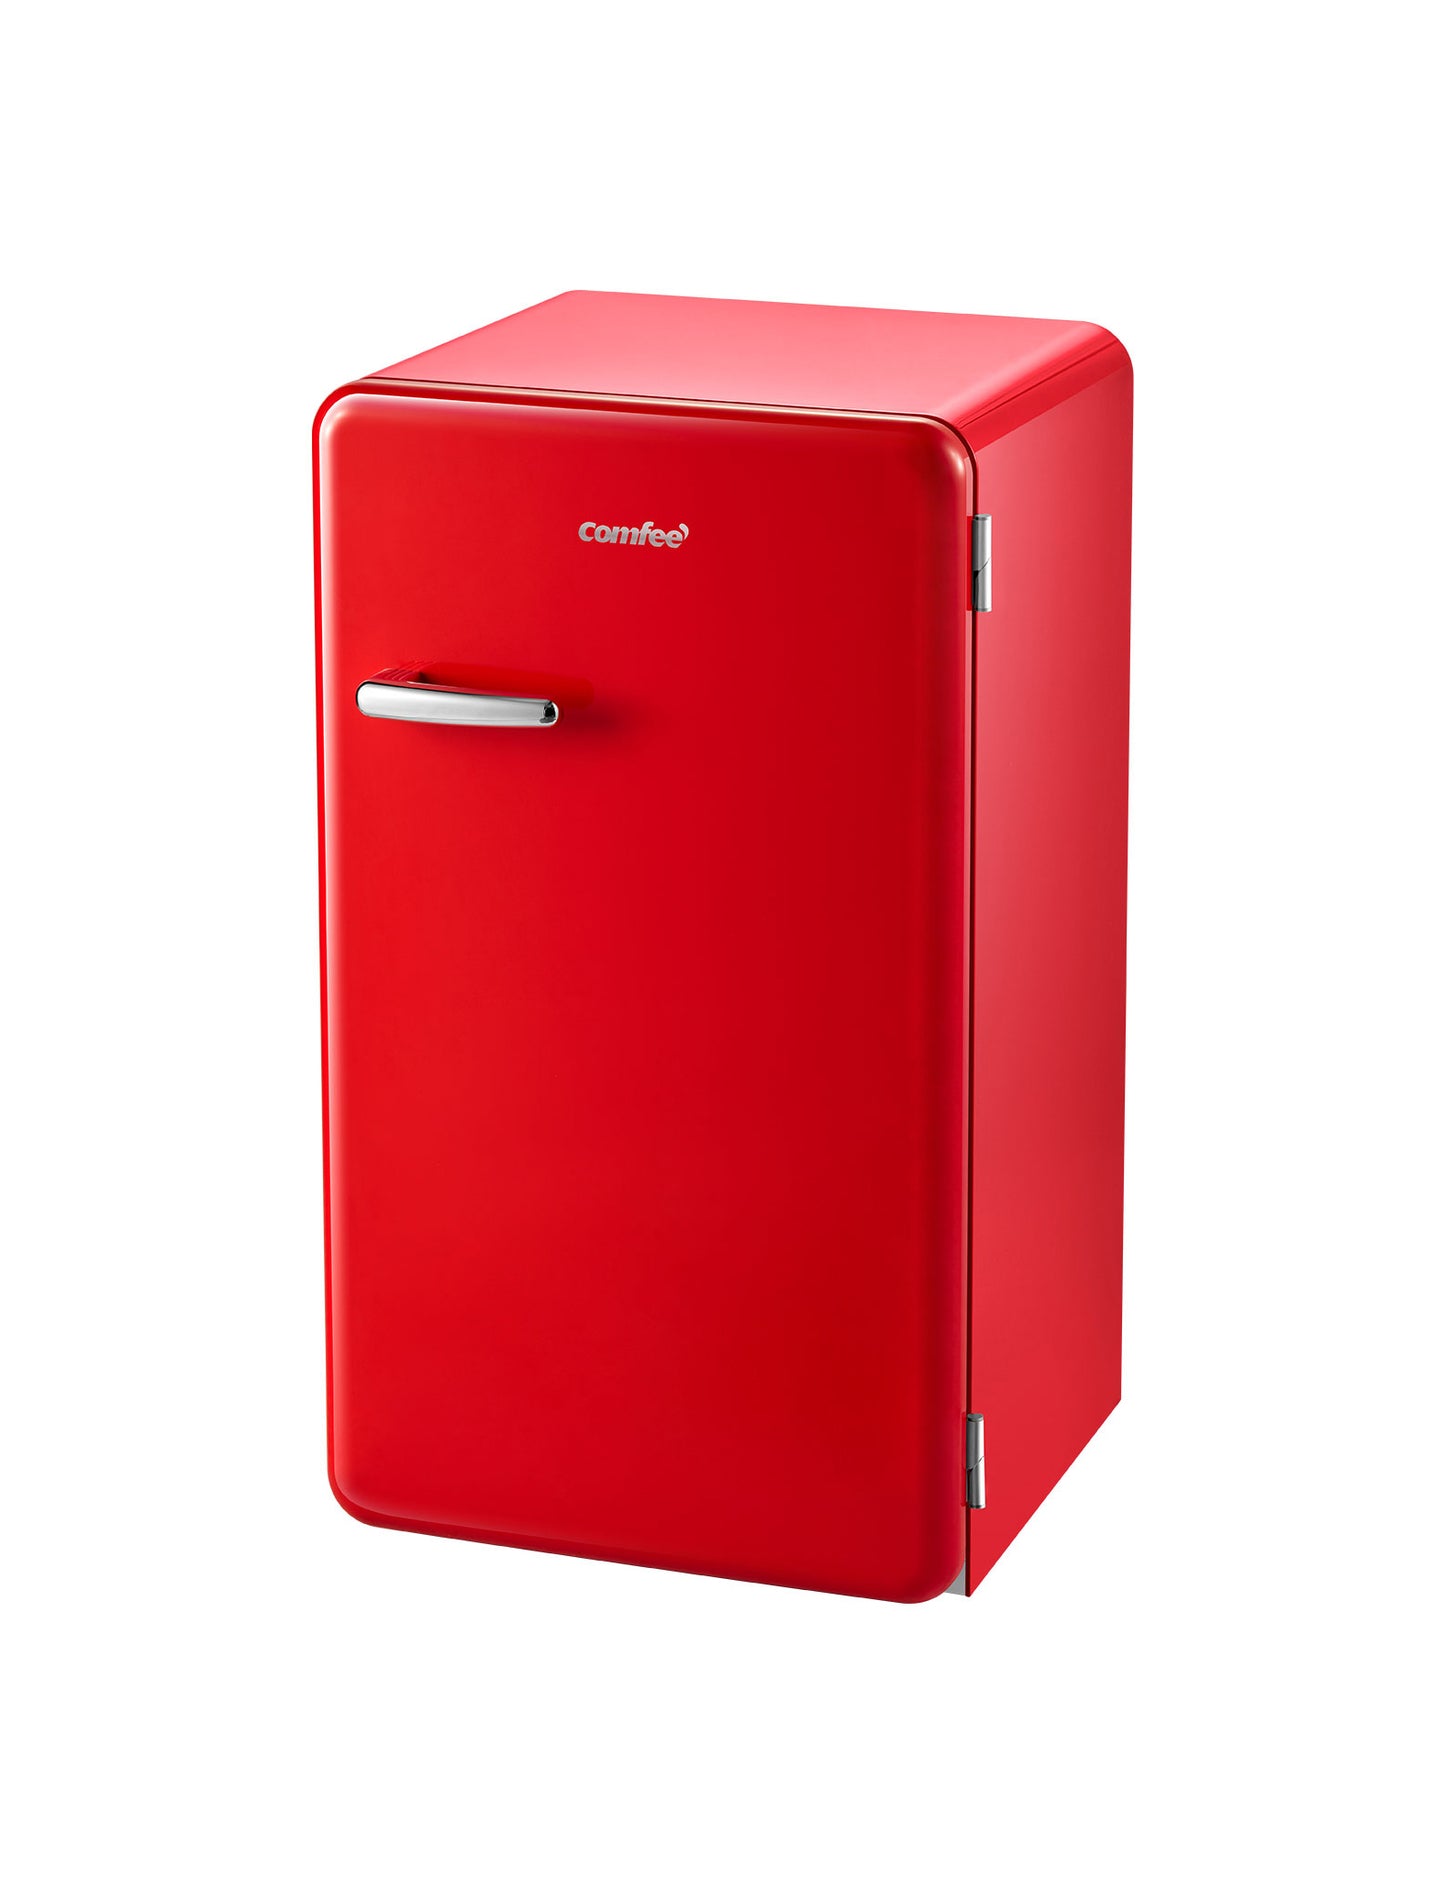 red retro style small fridge